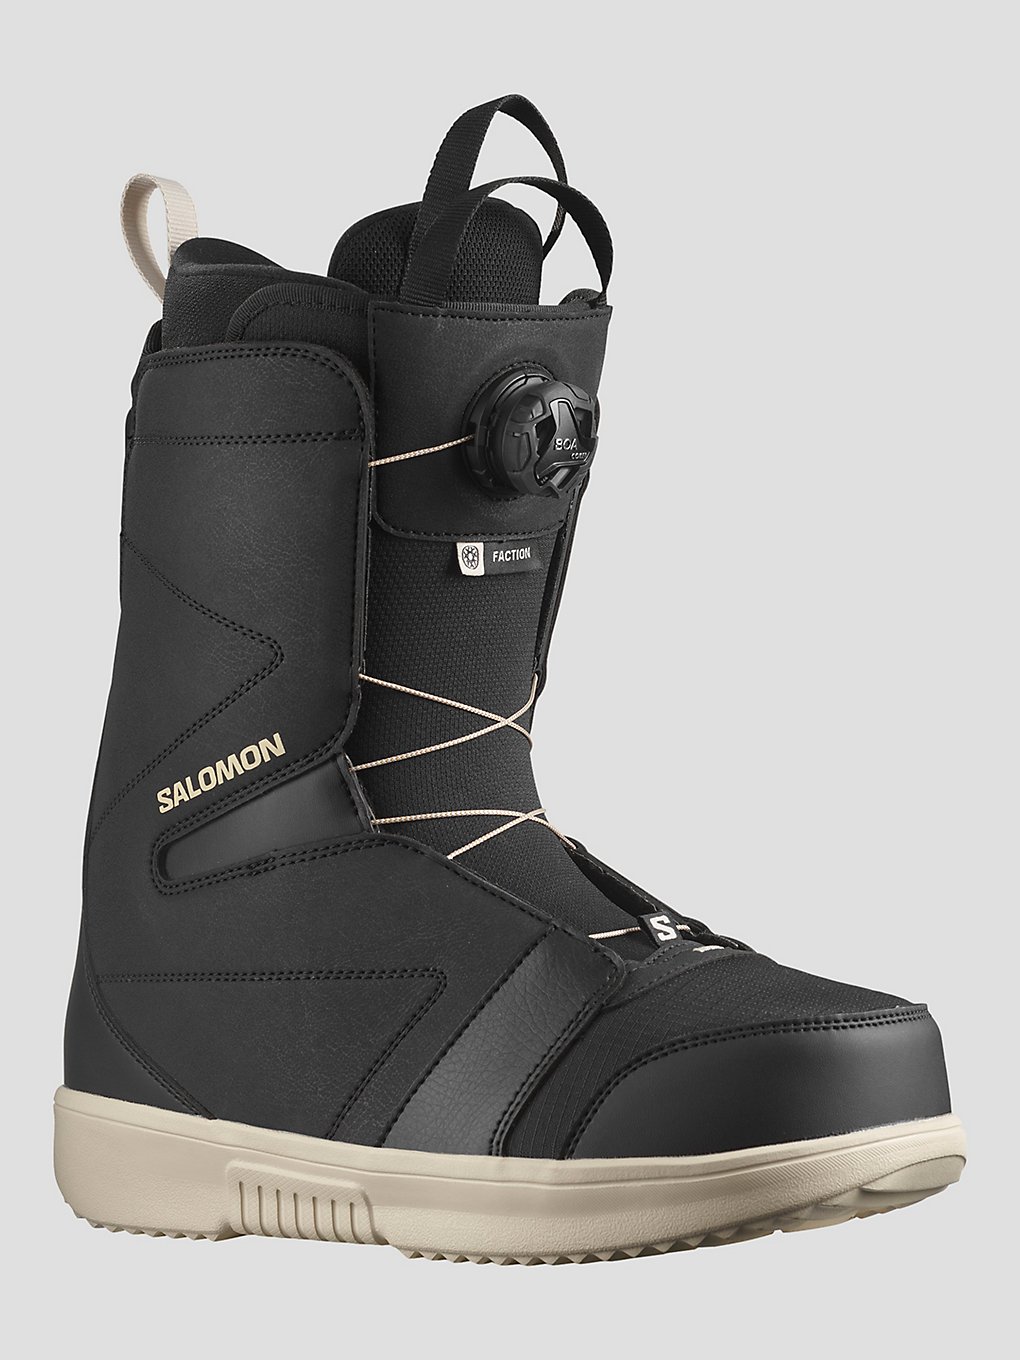 Salomon Faction Boa 2024 Snowboard-Boots blackblackrainy day kaufen